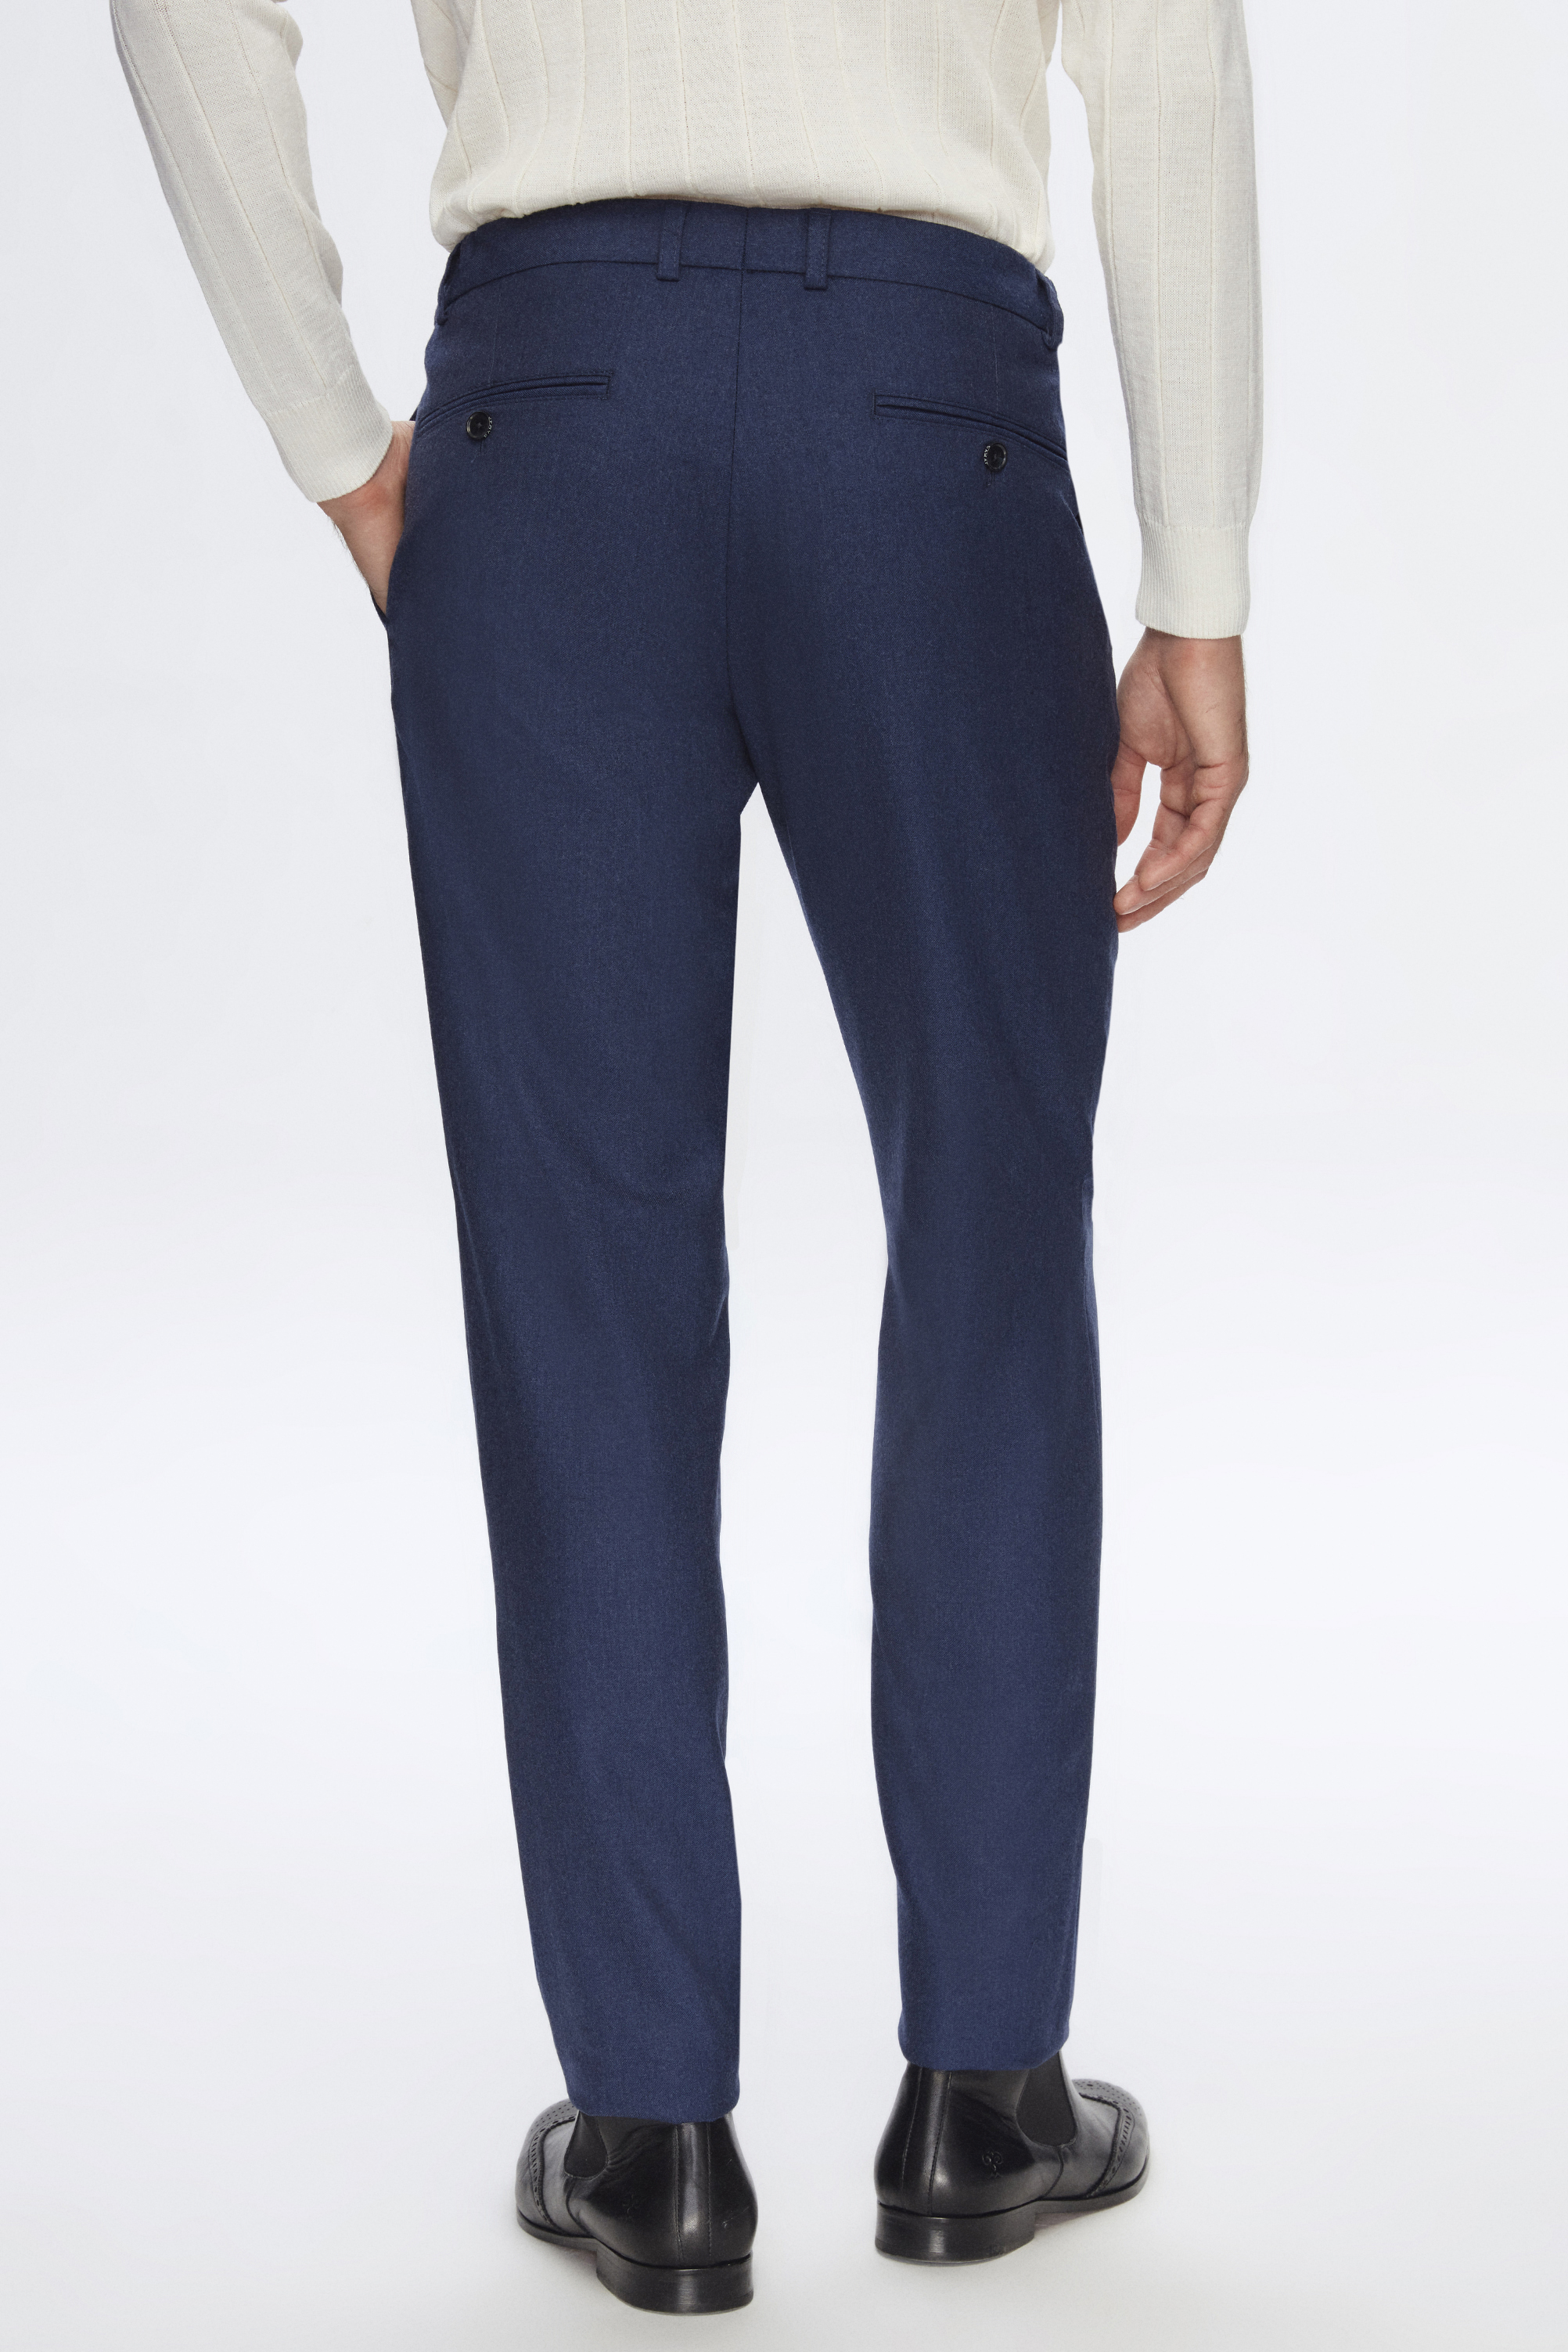 Damat Tween Damat Slim Fit Lacivert Düz %100 Yün Chino Pantolon. 3